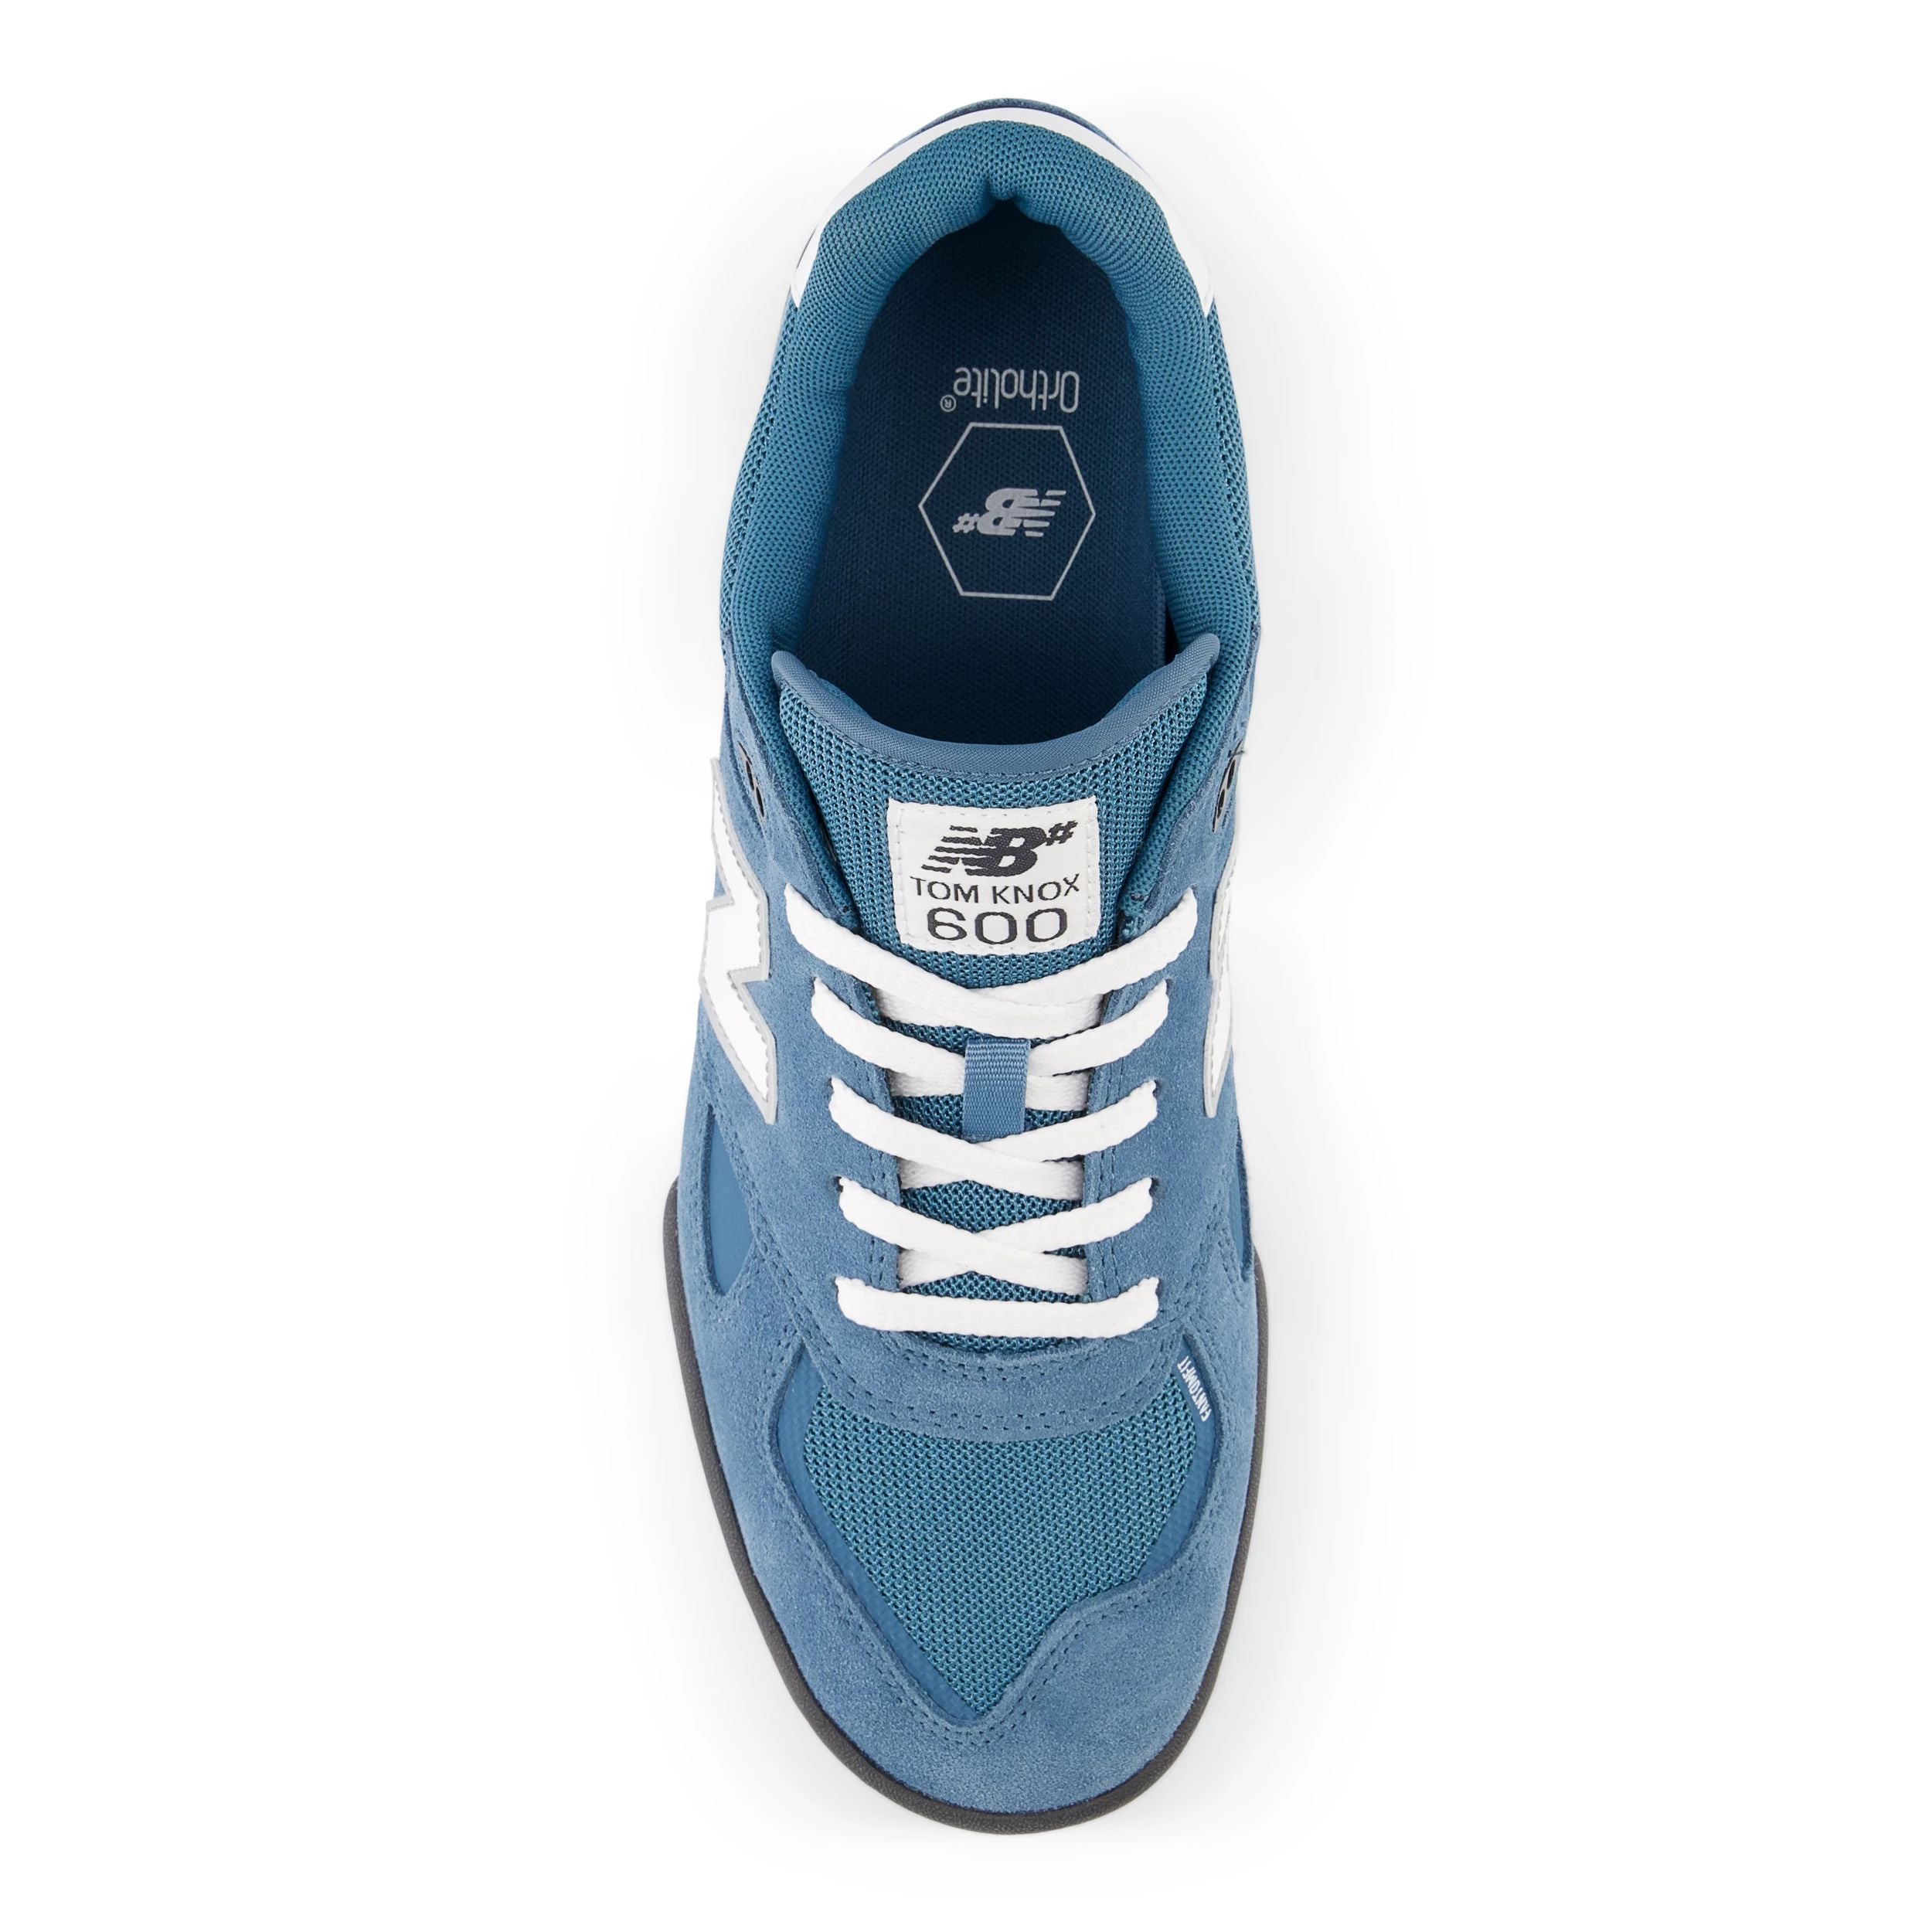 Elemental Blue Tom Knox NM600 NB Numeric Skate Shoe Top